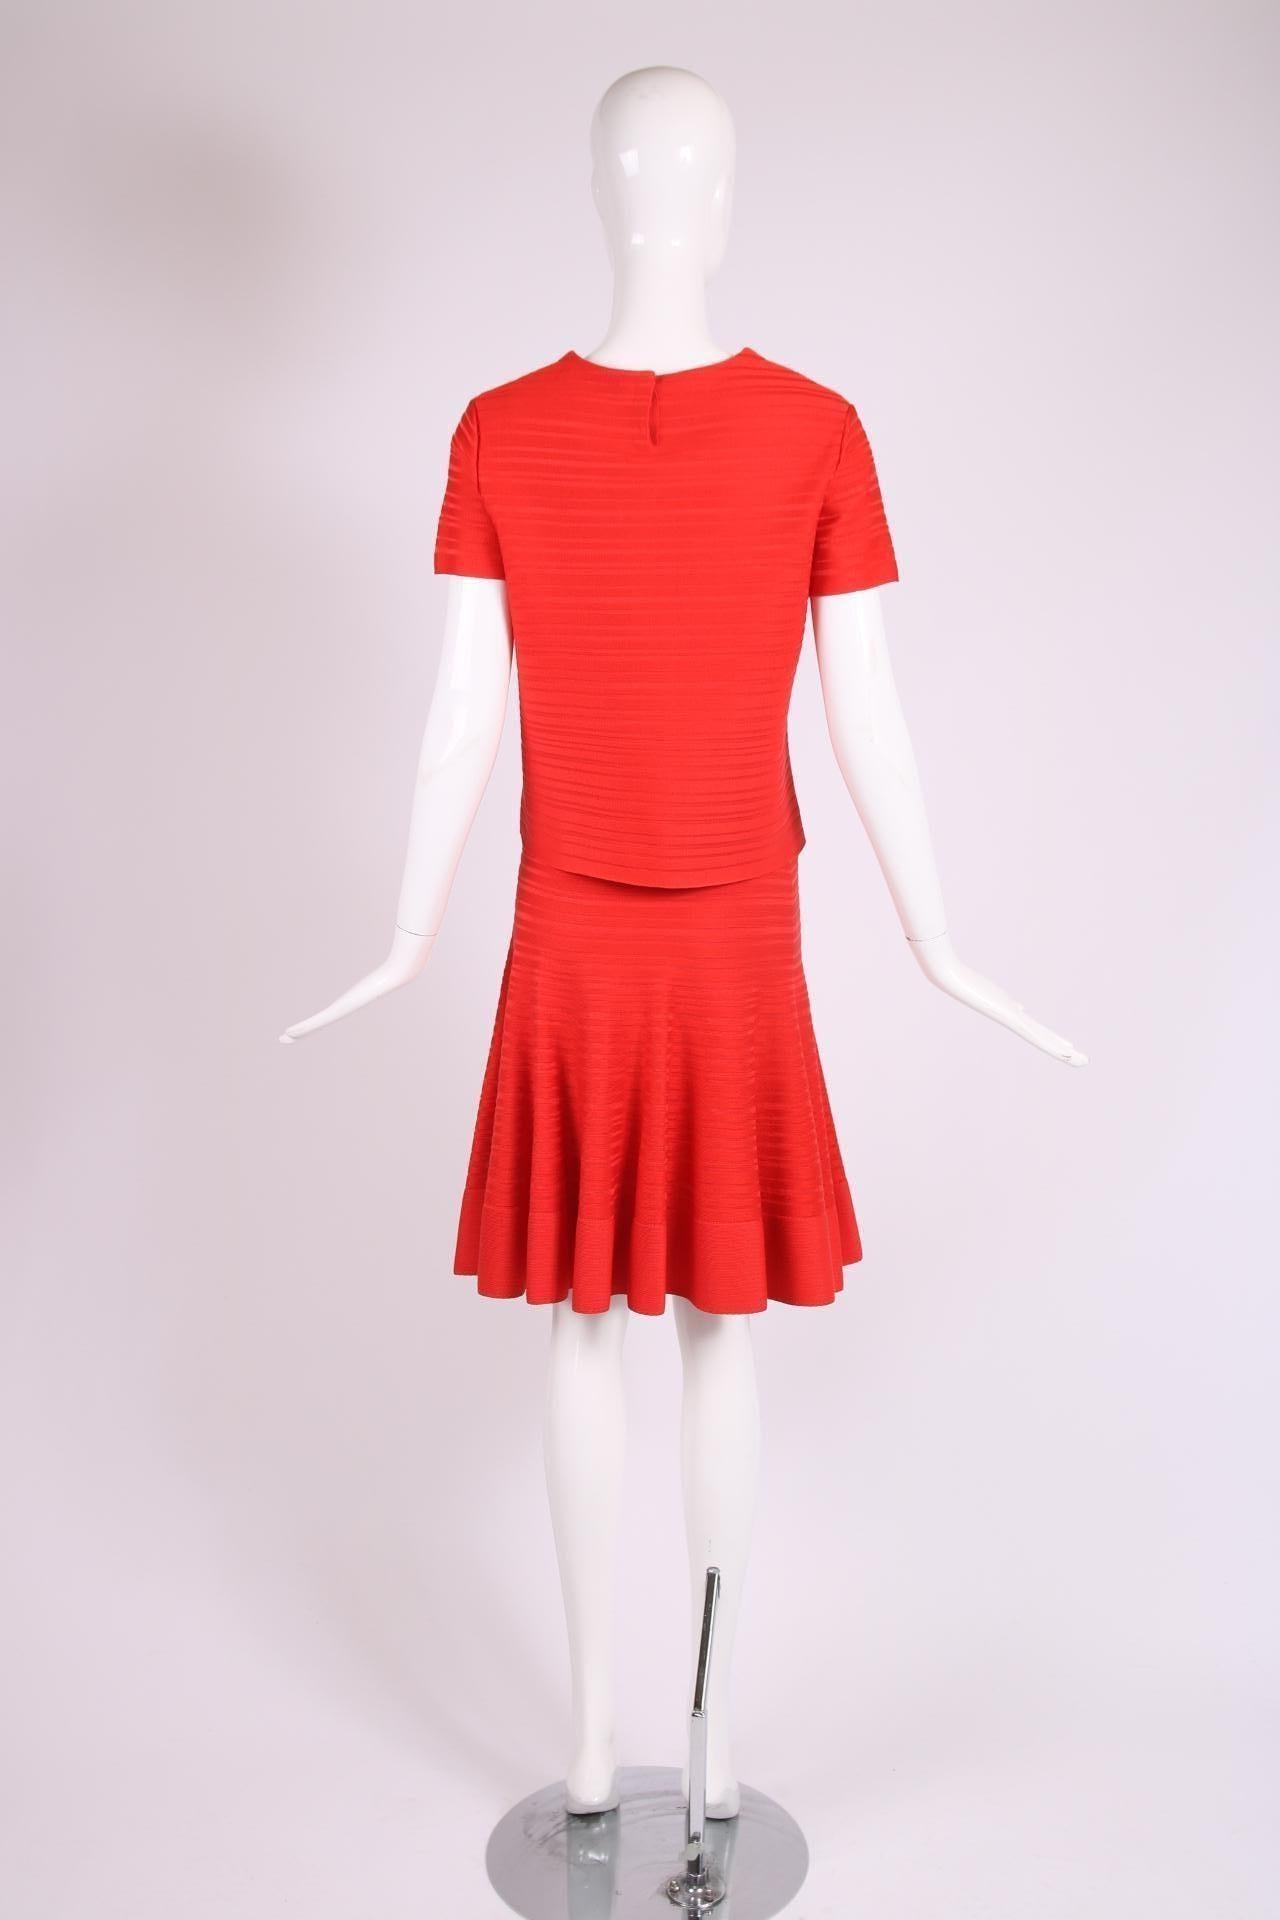 Christian Dior Red Ribbed Crop Top & Skirt Ensemble 1